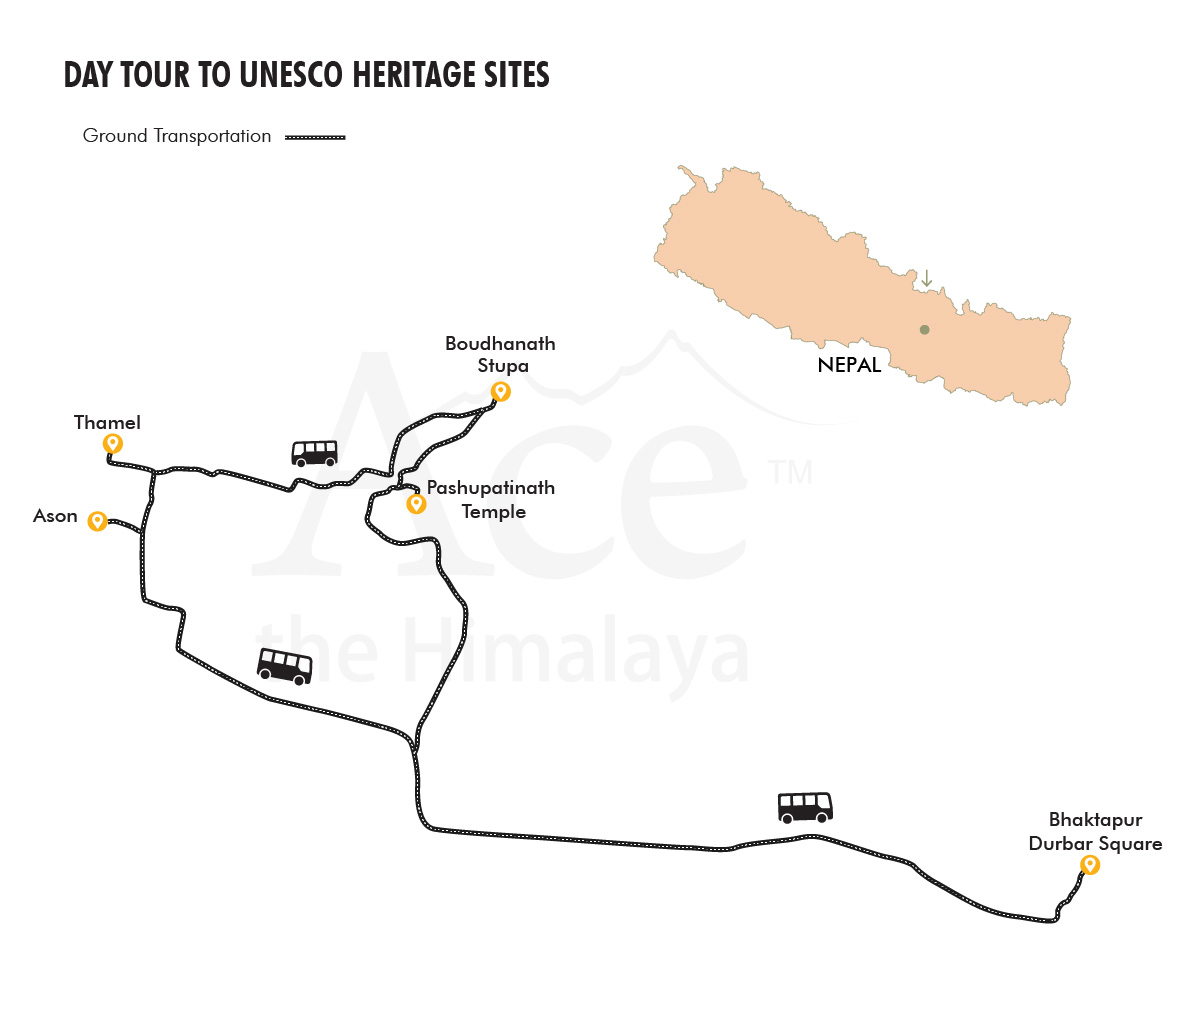 Day Tour to UNESCO Heritage Sites